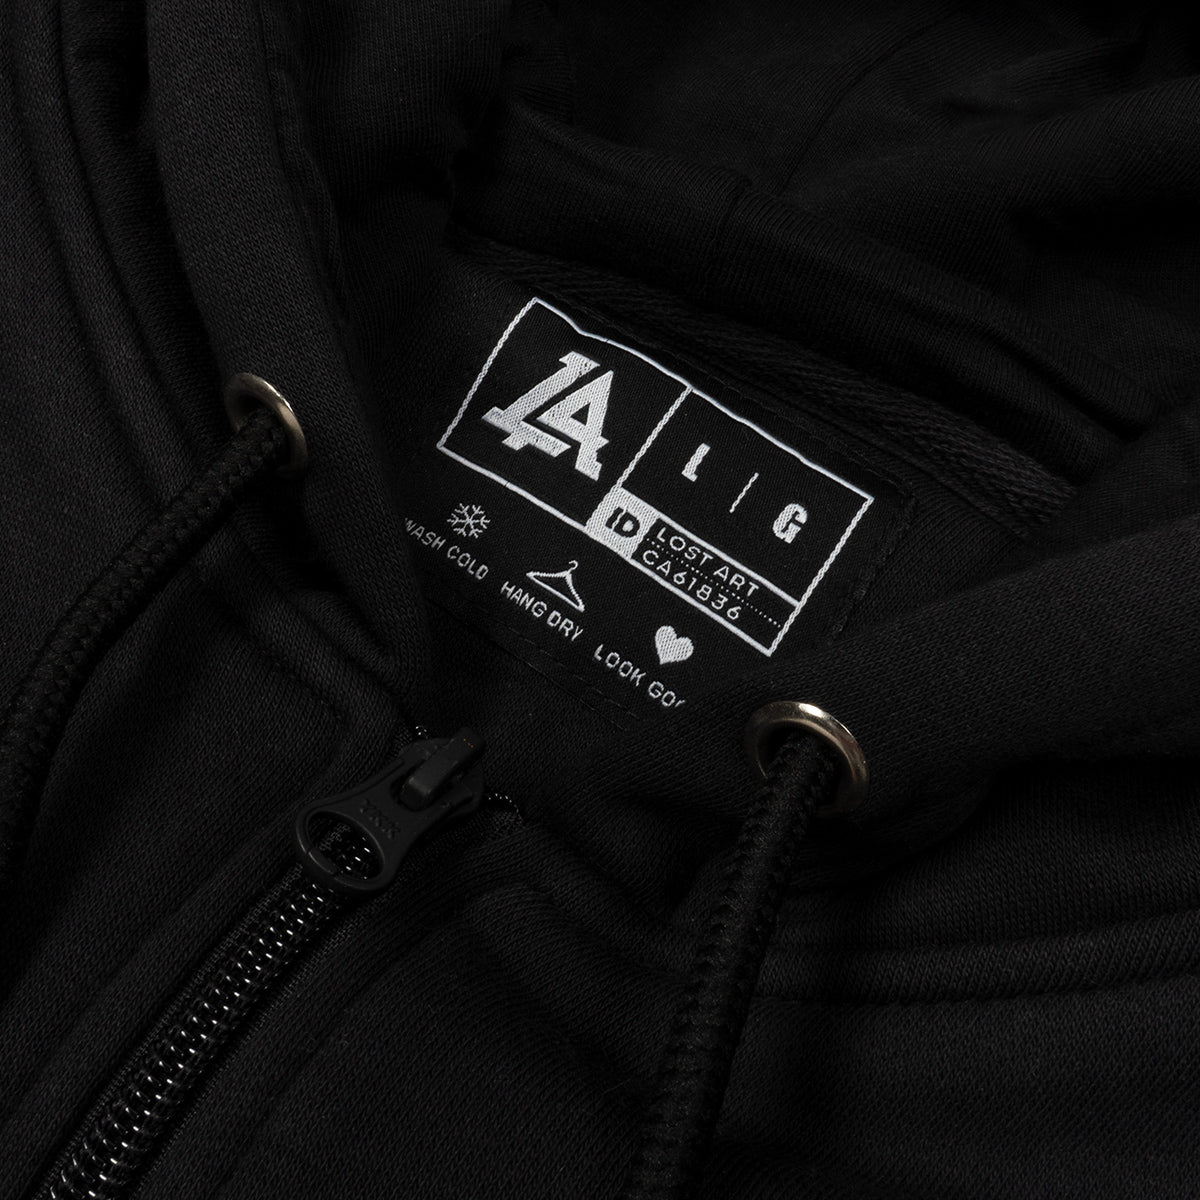 Lost Art Canada - black leisure suit sweatsuit sweatshirt inside tag view